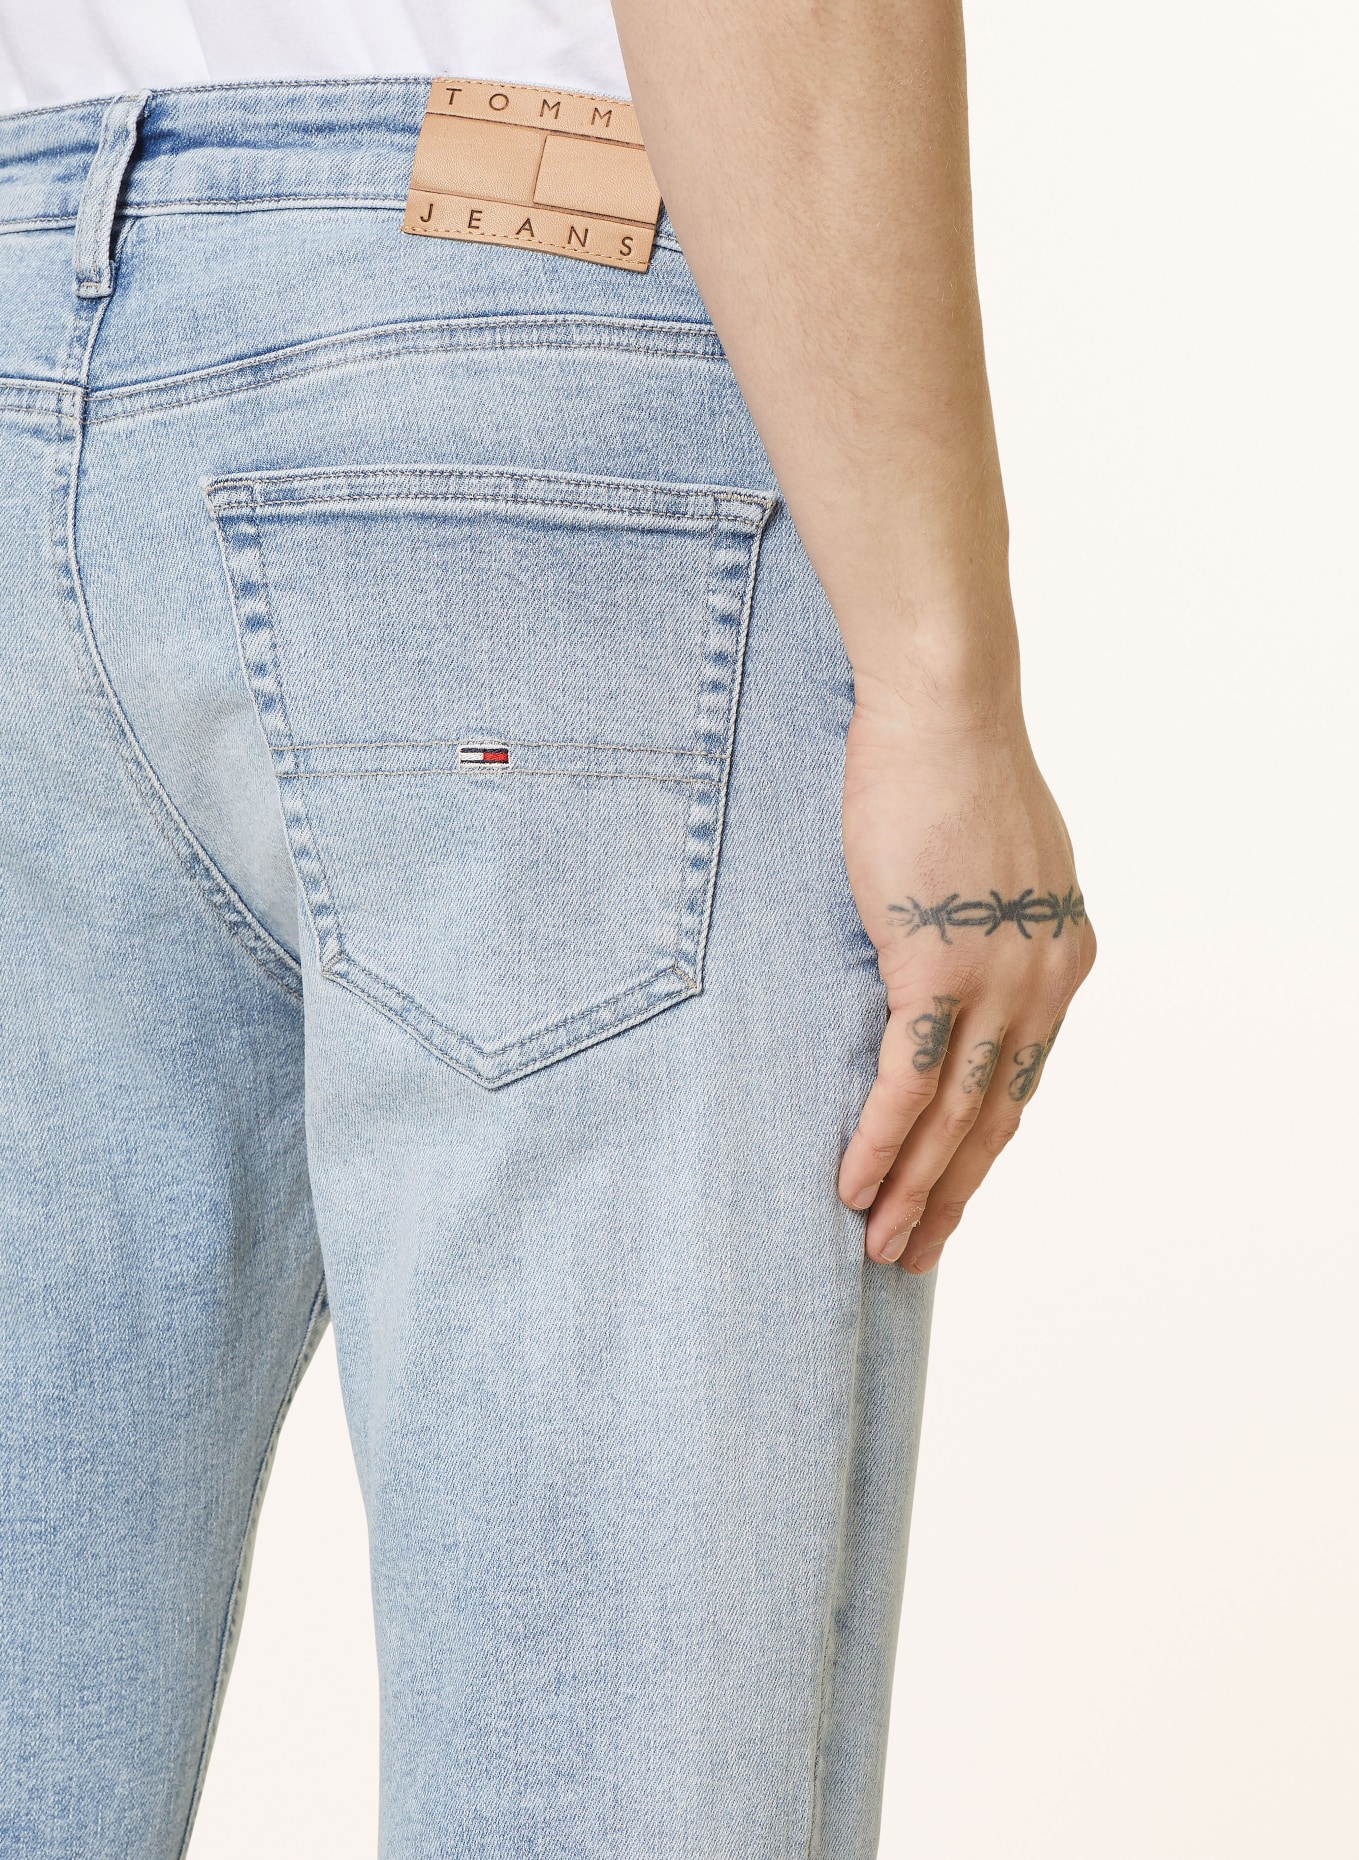 TOMMY JEANS Jeans AUSTIN Slim Tapered Fit, Farbe: 1AB Denim Light (Bild 6)